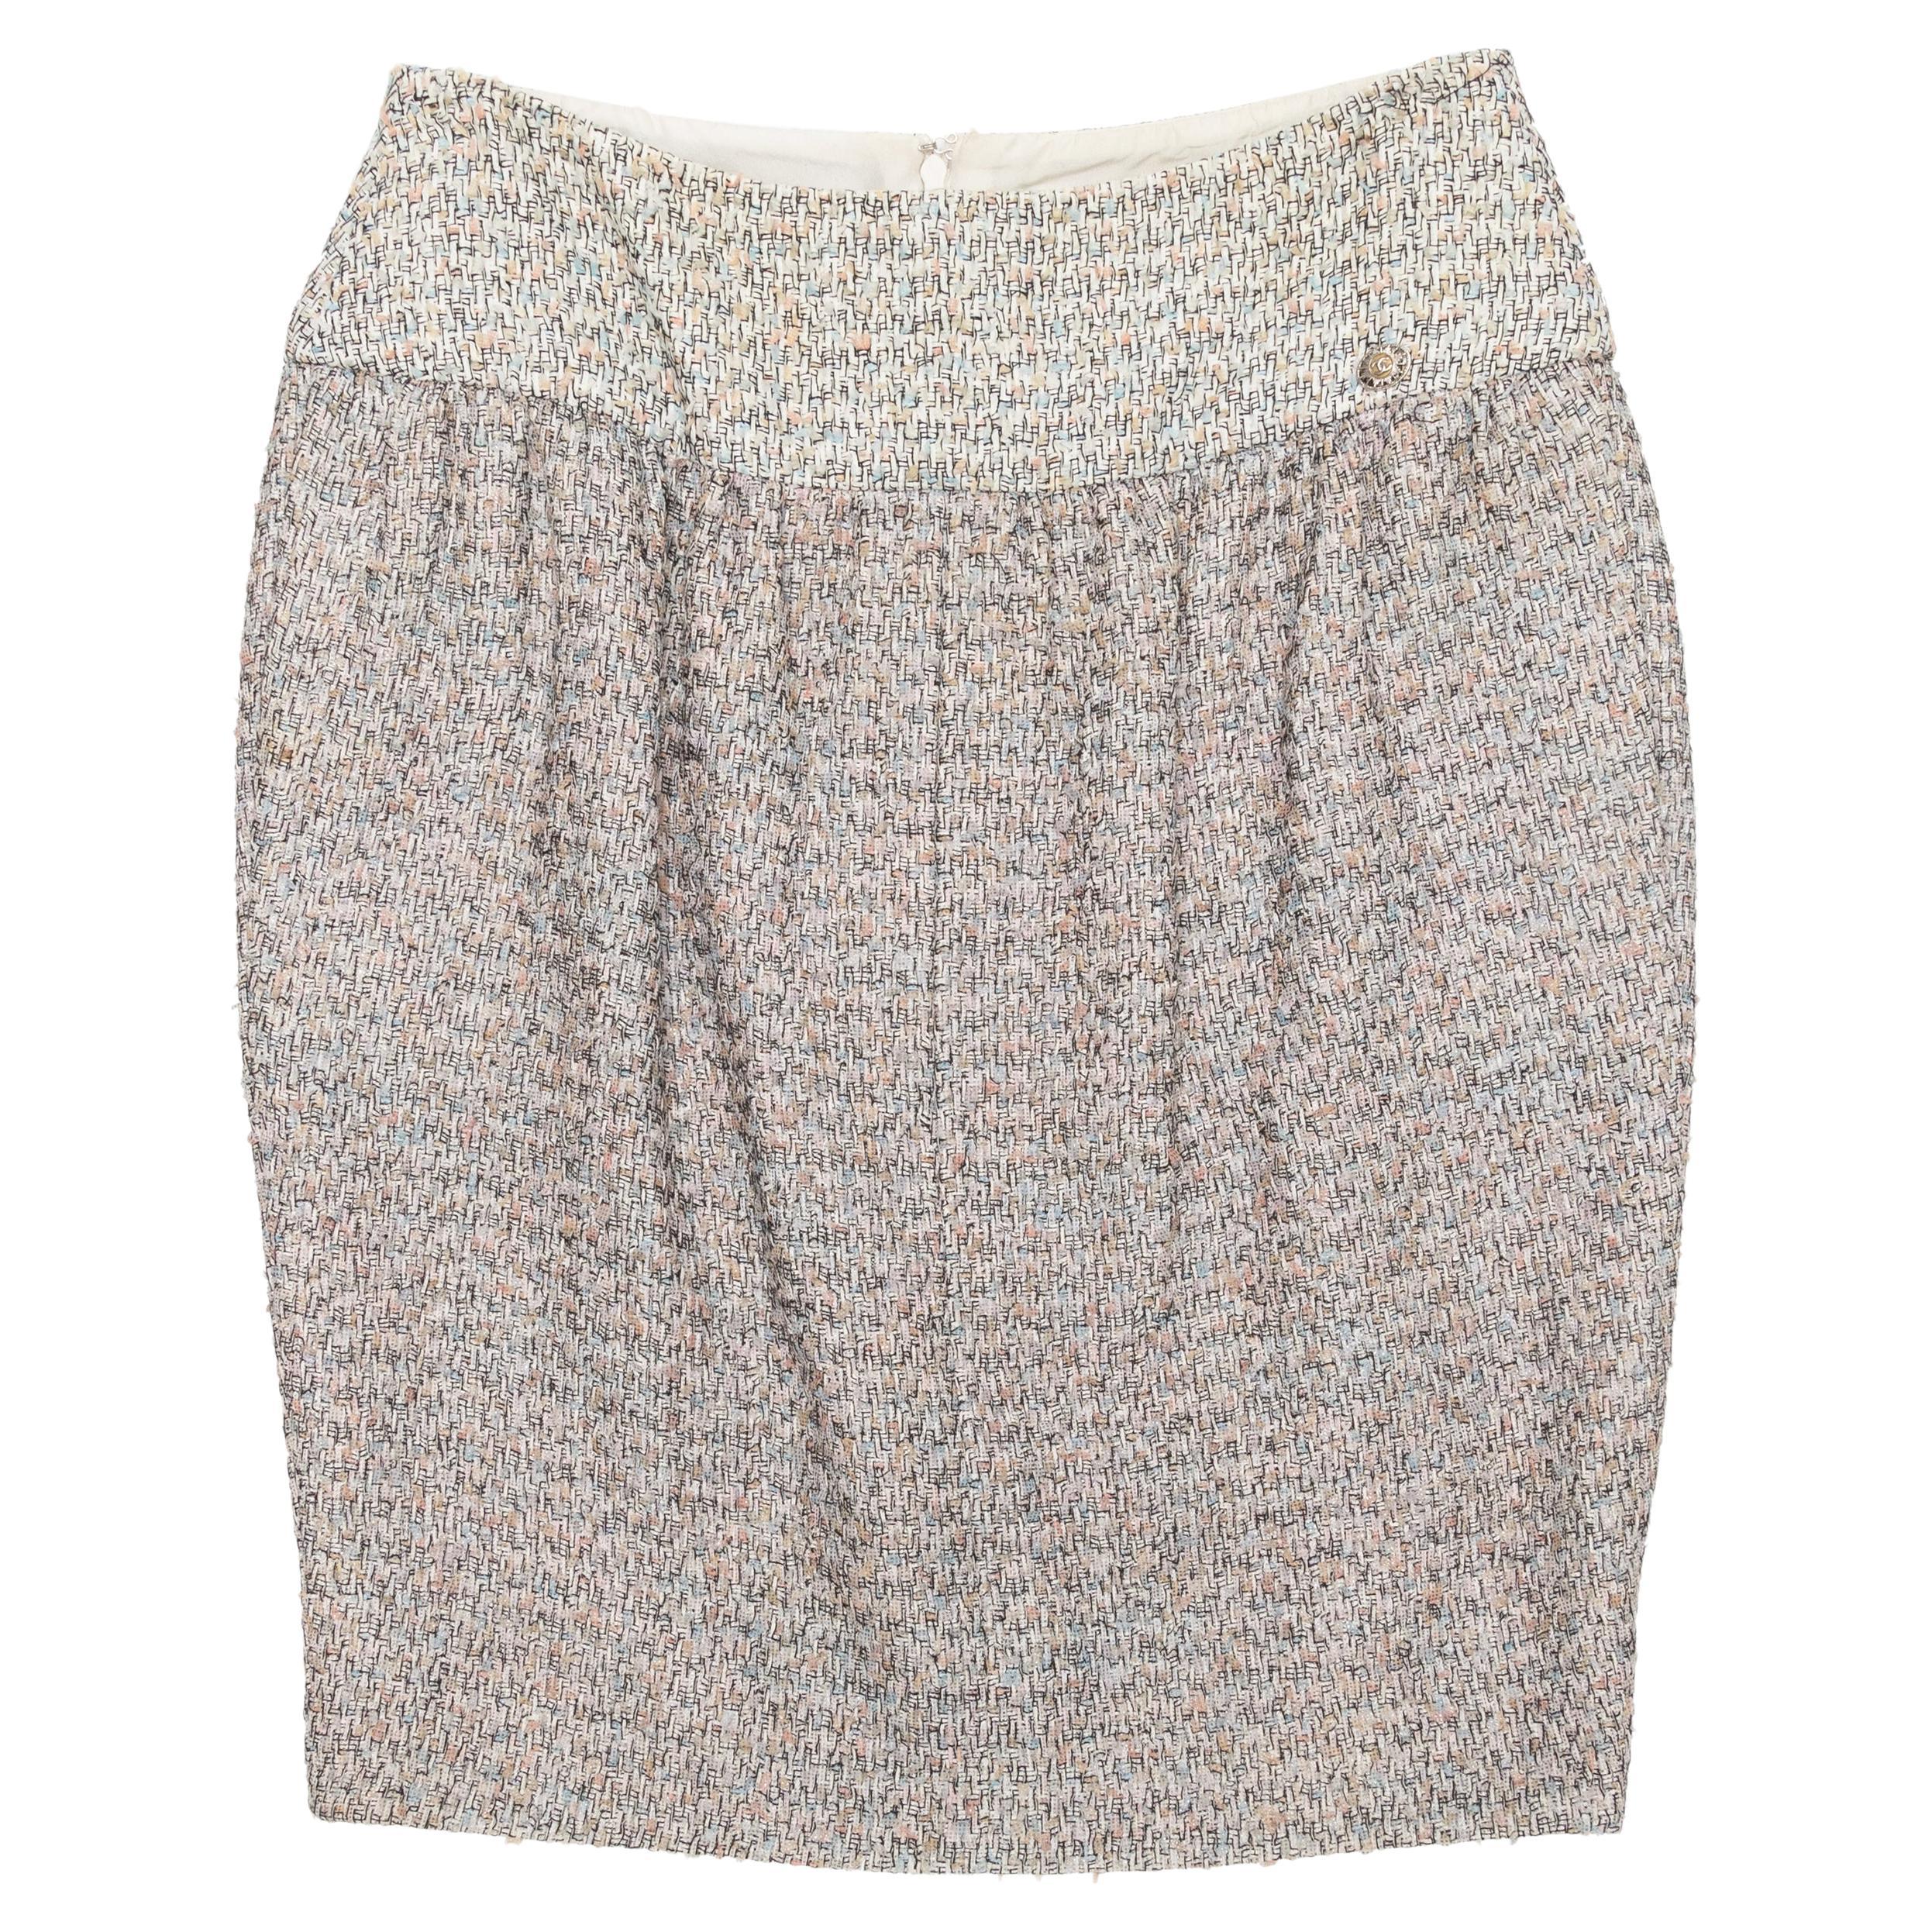 White & Multicolor Chanel Tweed Mini Skirt